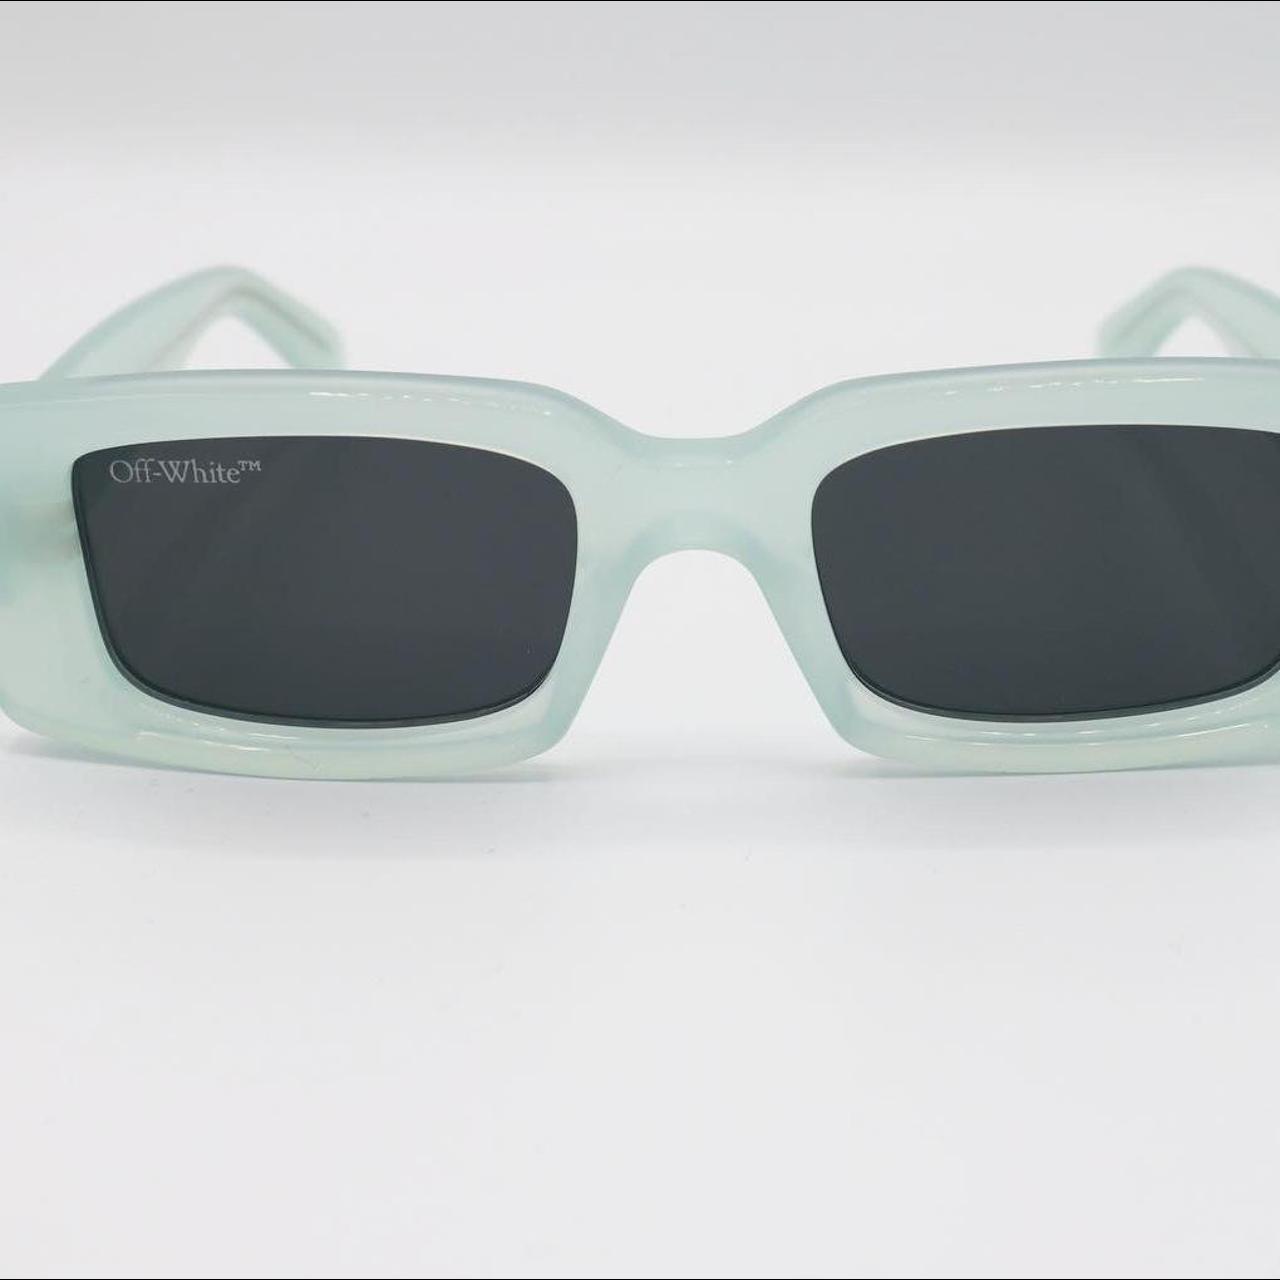 Off-White Women's Sunglasses (3)